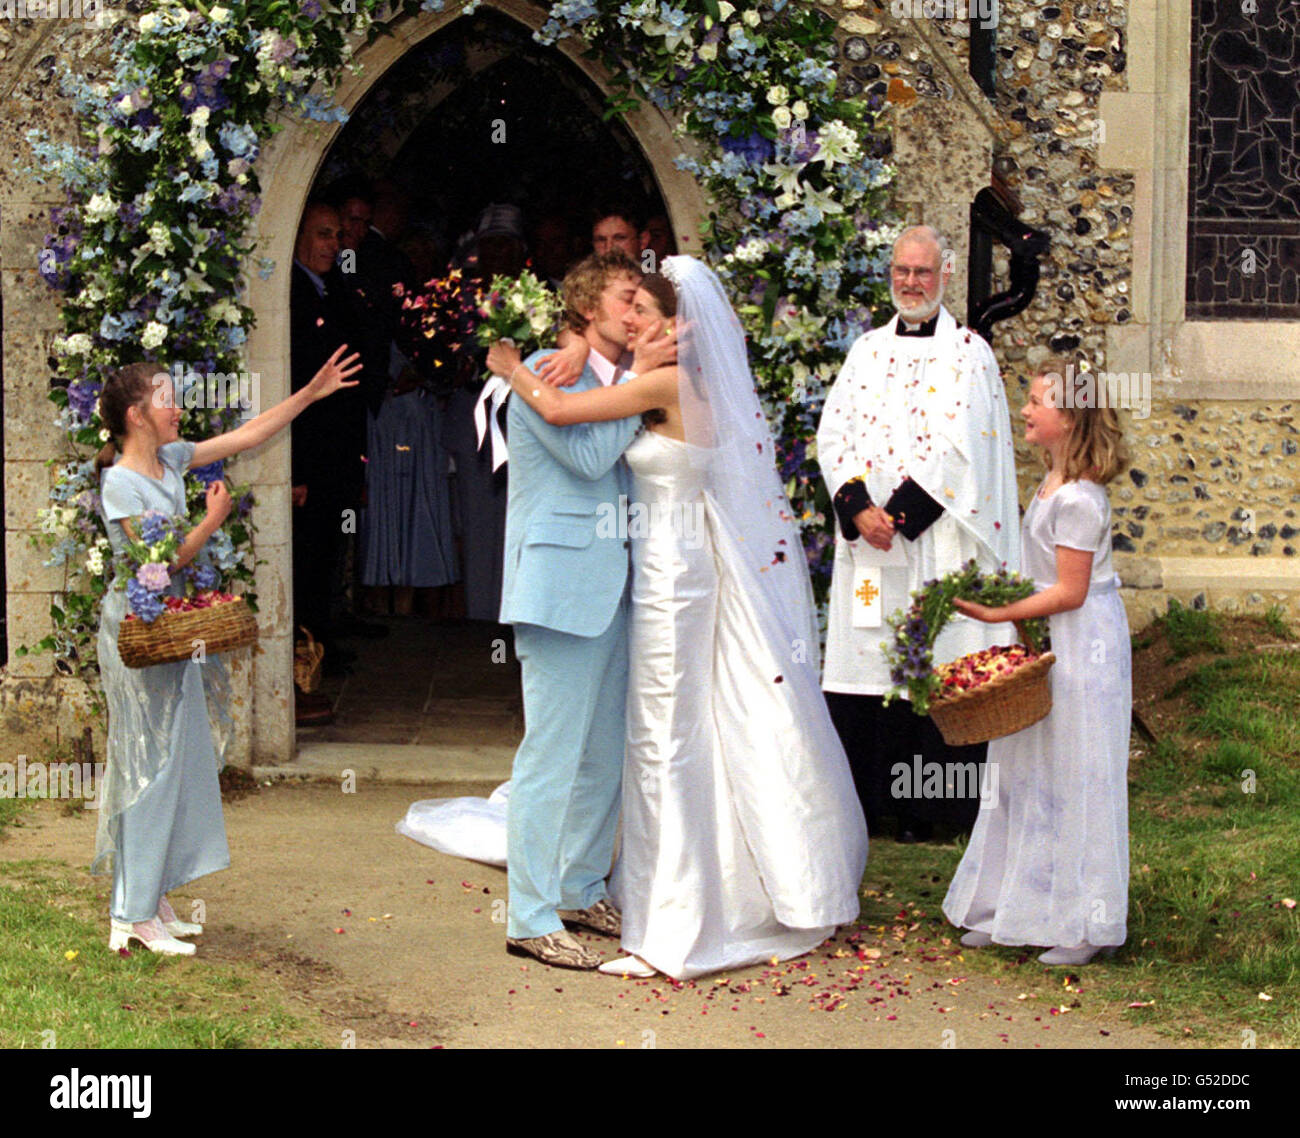 Jamie Oliver wedding kiss Stock Photo